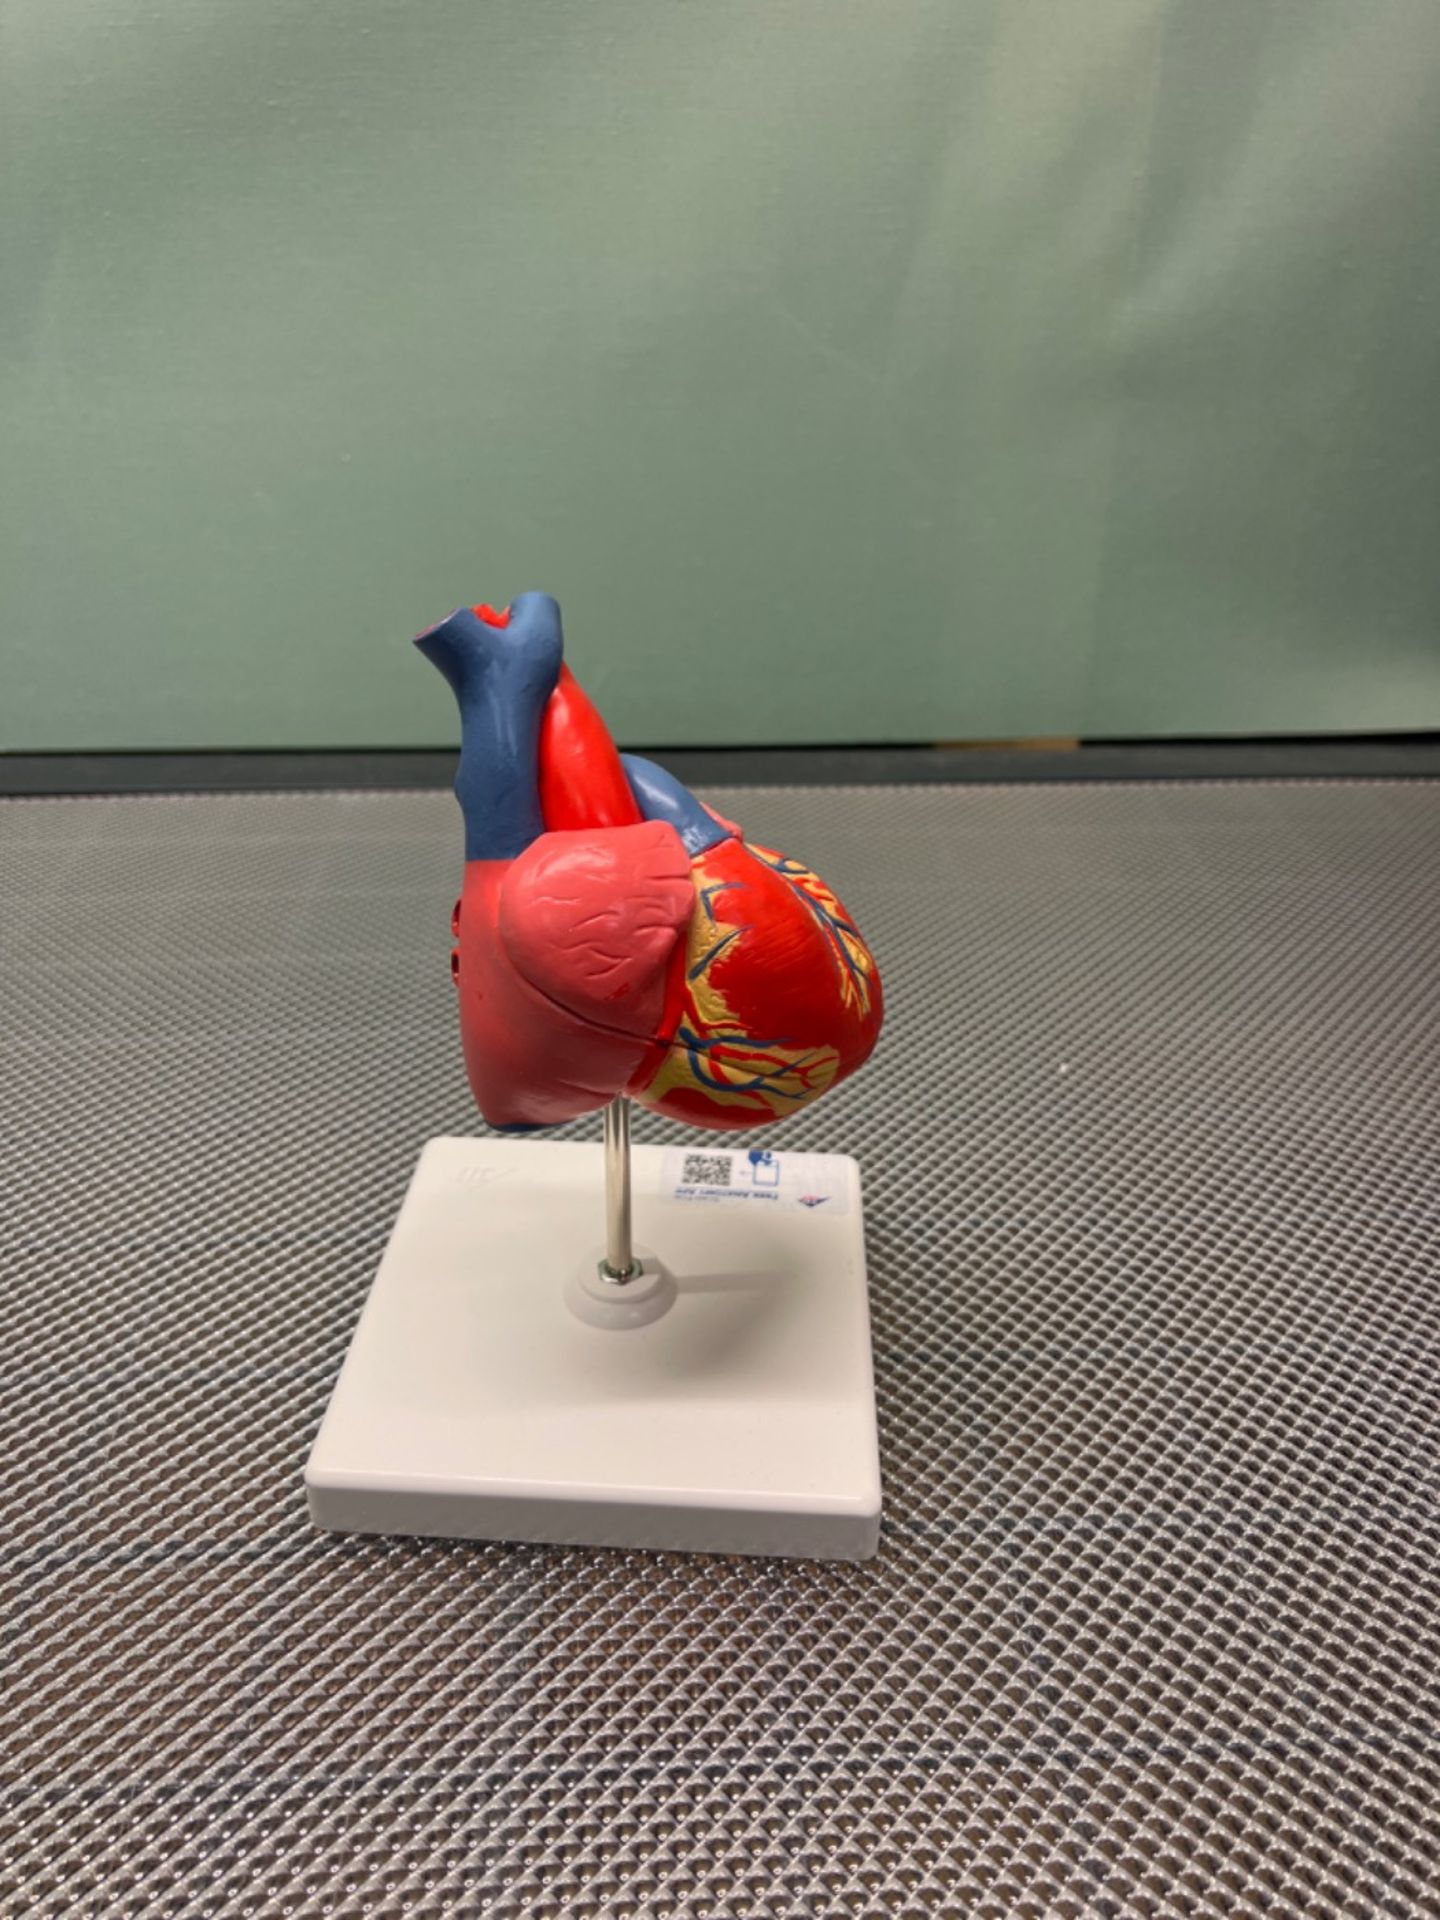 3B Scientific Human Anatomy - Classic Heart Model, 2 Part + free Anatomy App - 3B Smart Anatomy - Image 2 of 3